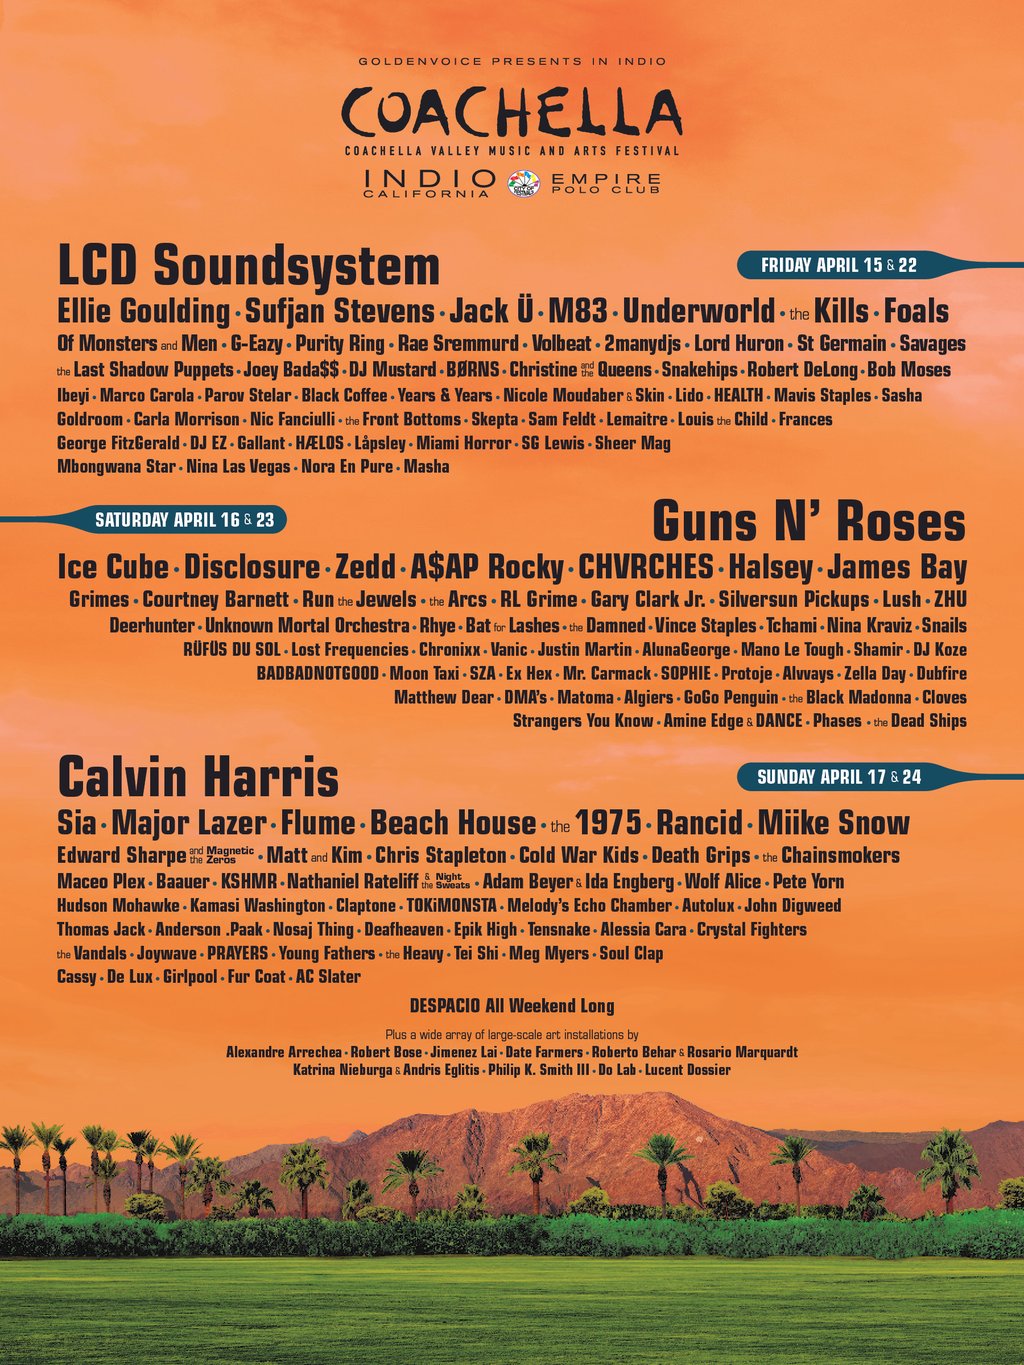 Coachella 2016 Lineup: LCD Soundsystem, Guns N' Roses, Calvin Harris, and More